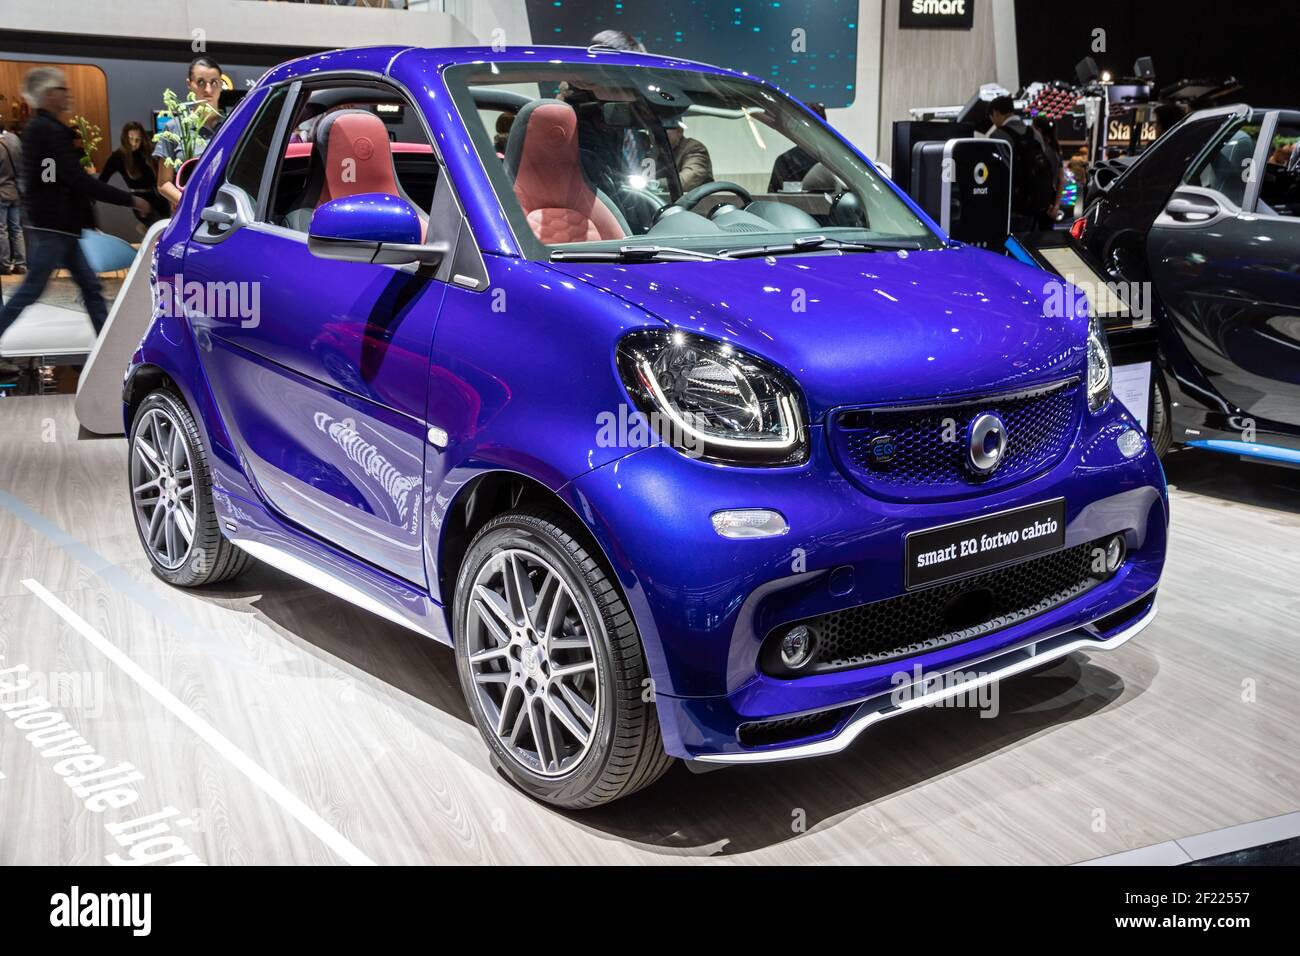 Smart EQ fortwo cabio Auto auf dem Pariser Automobilsalon in Expo Porte de Versailles. Frankreich - 2. Oktober 2018 Stockfoto